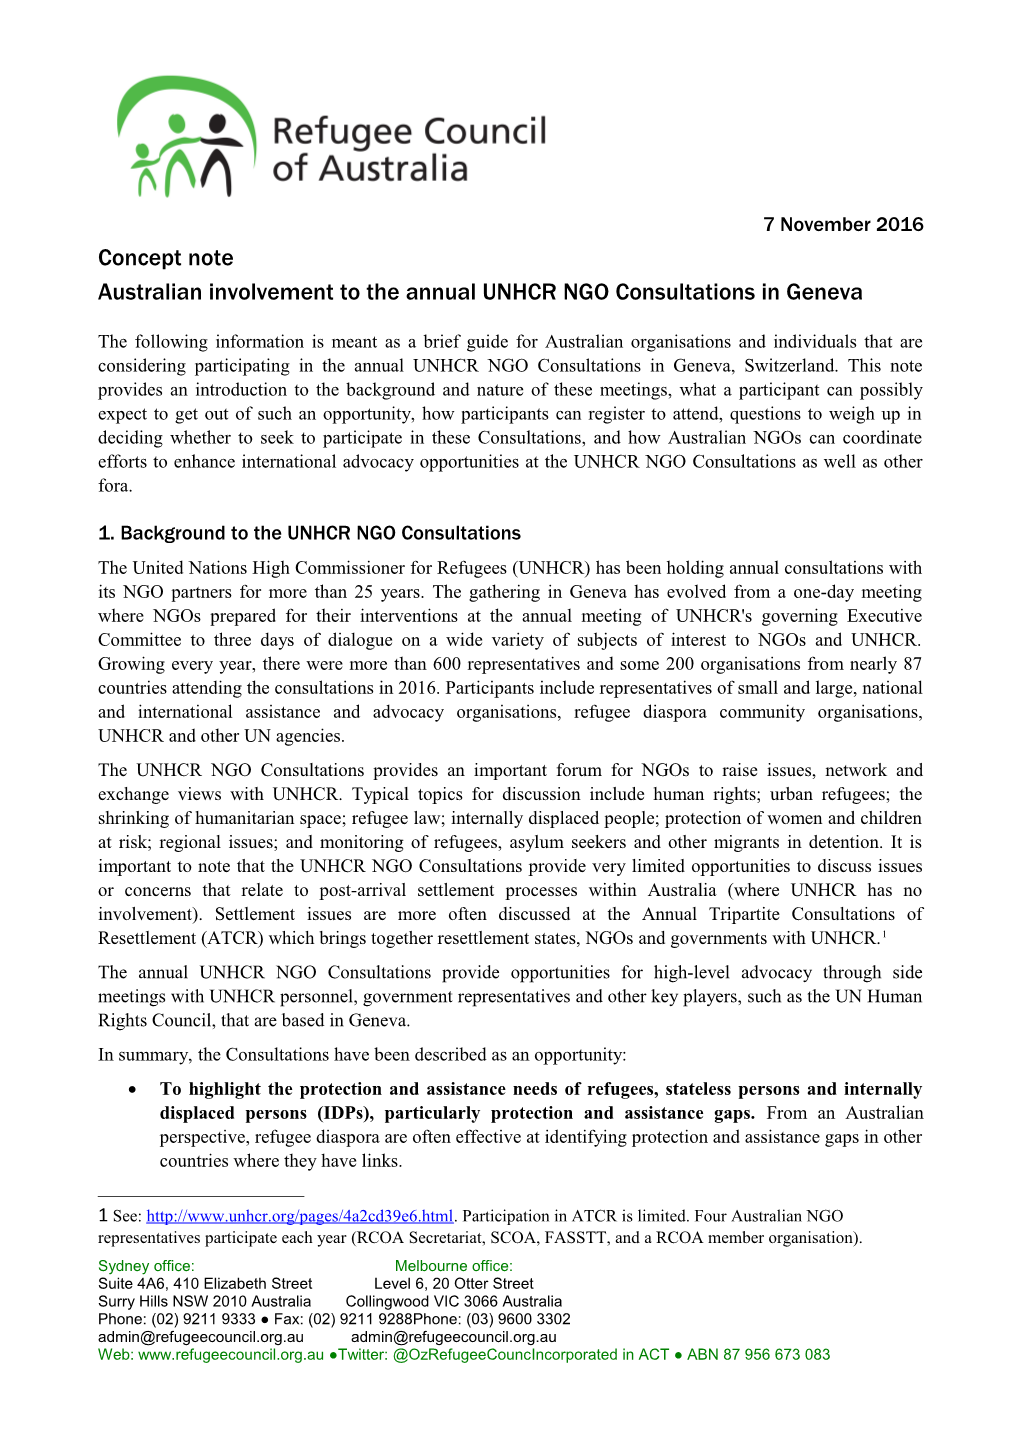 Australian Involvement to the Annual UNHCR NGO Consultations in Geneva